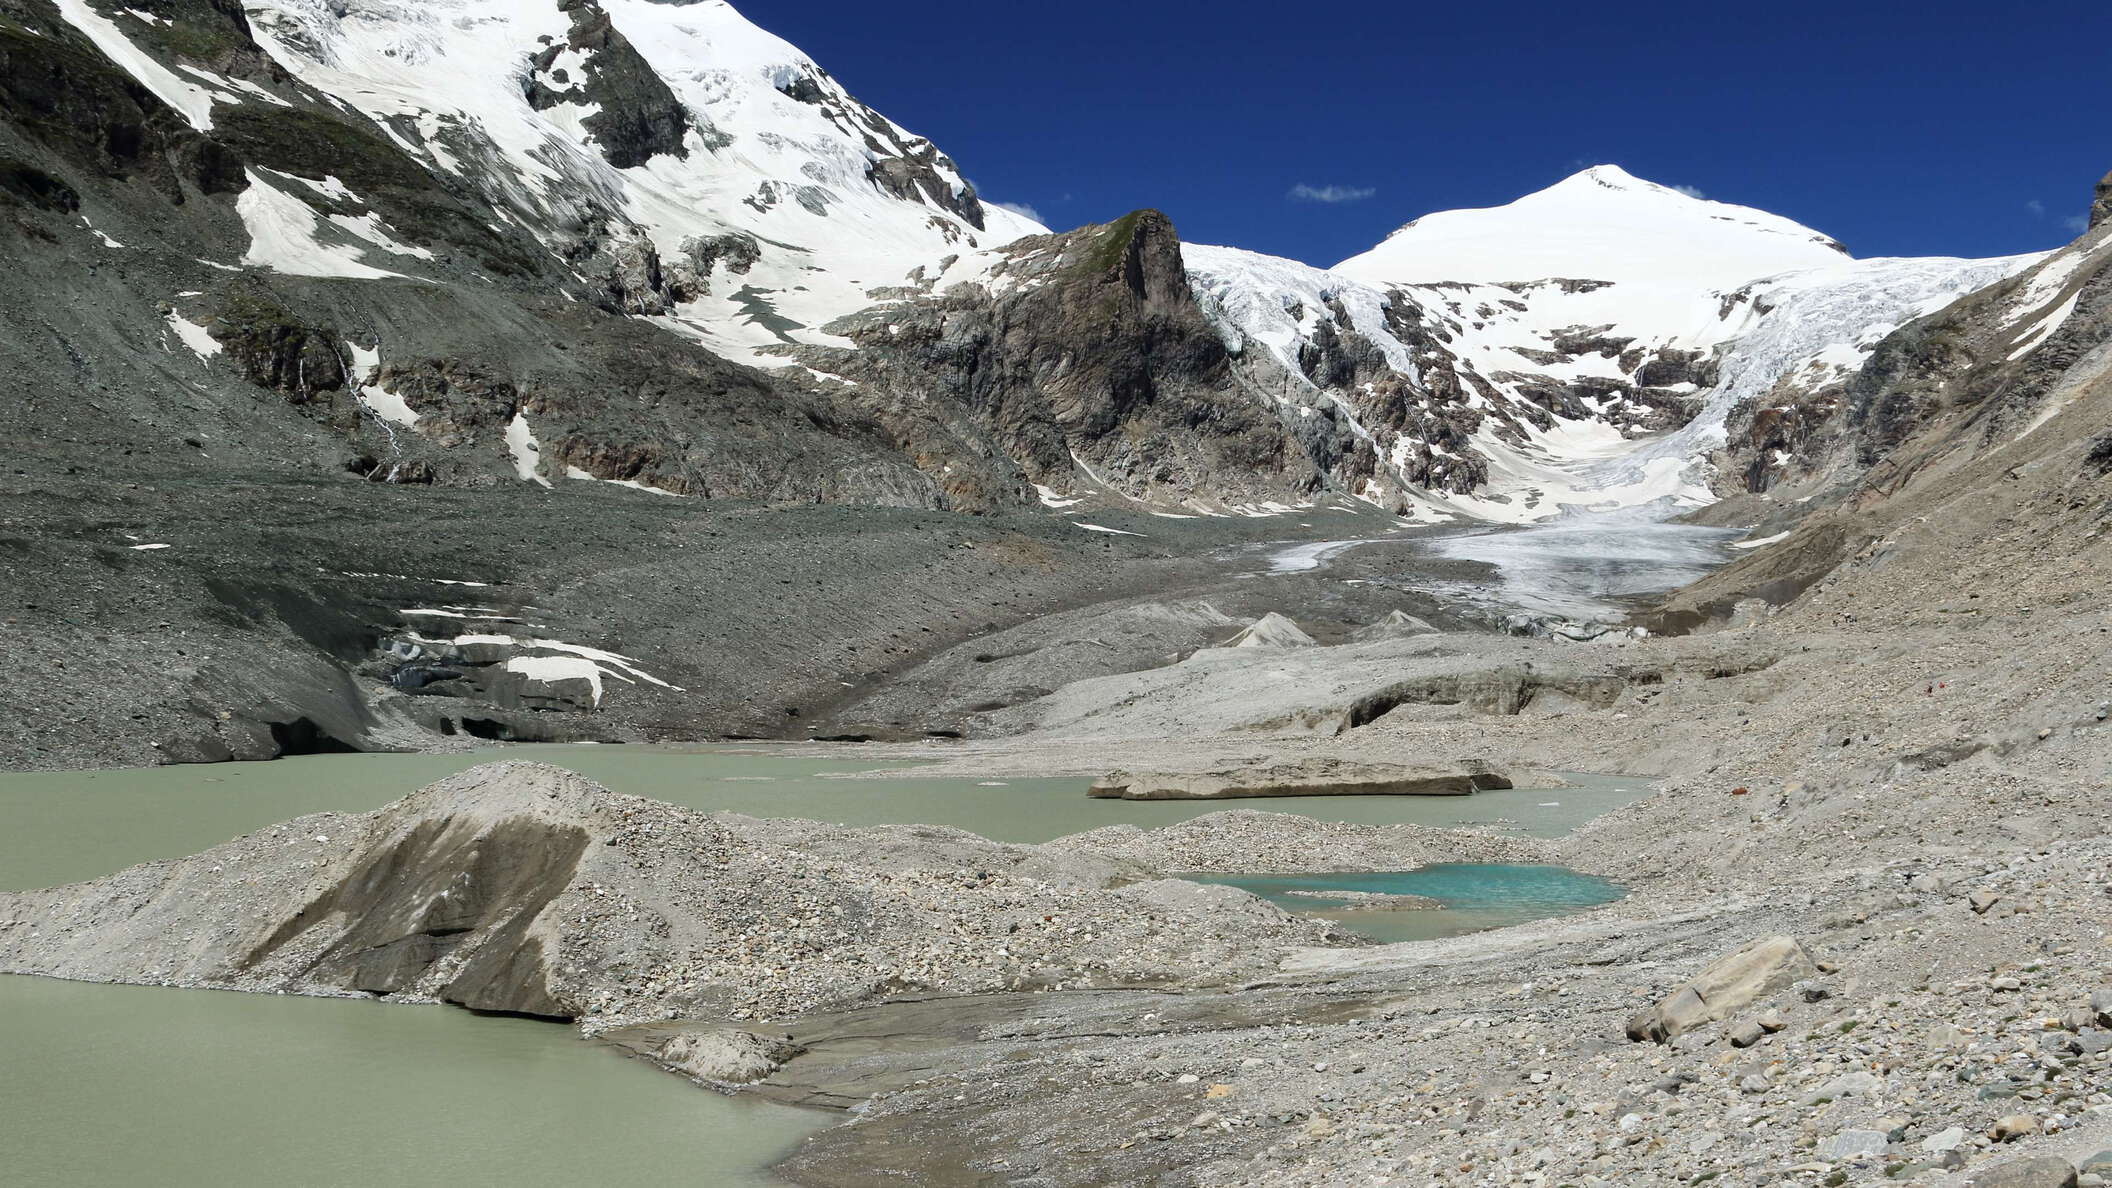 Pasterze | Glacier forefield and Johannisberg